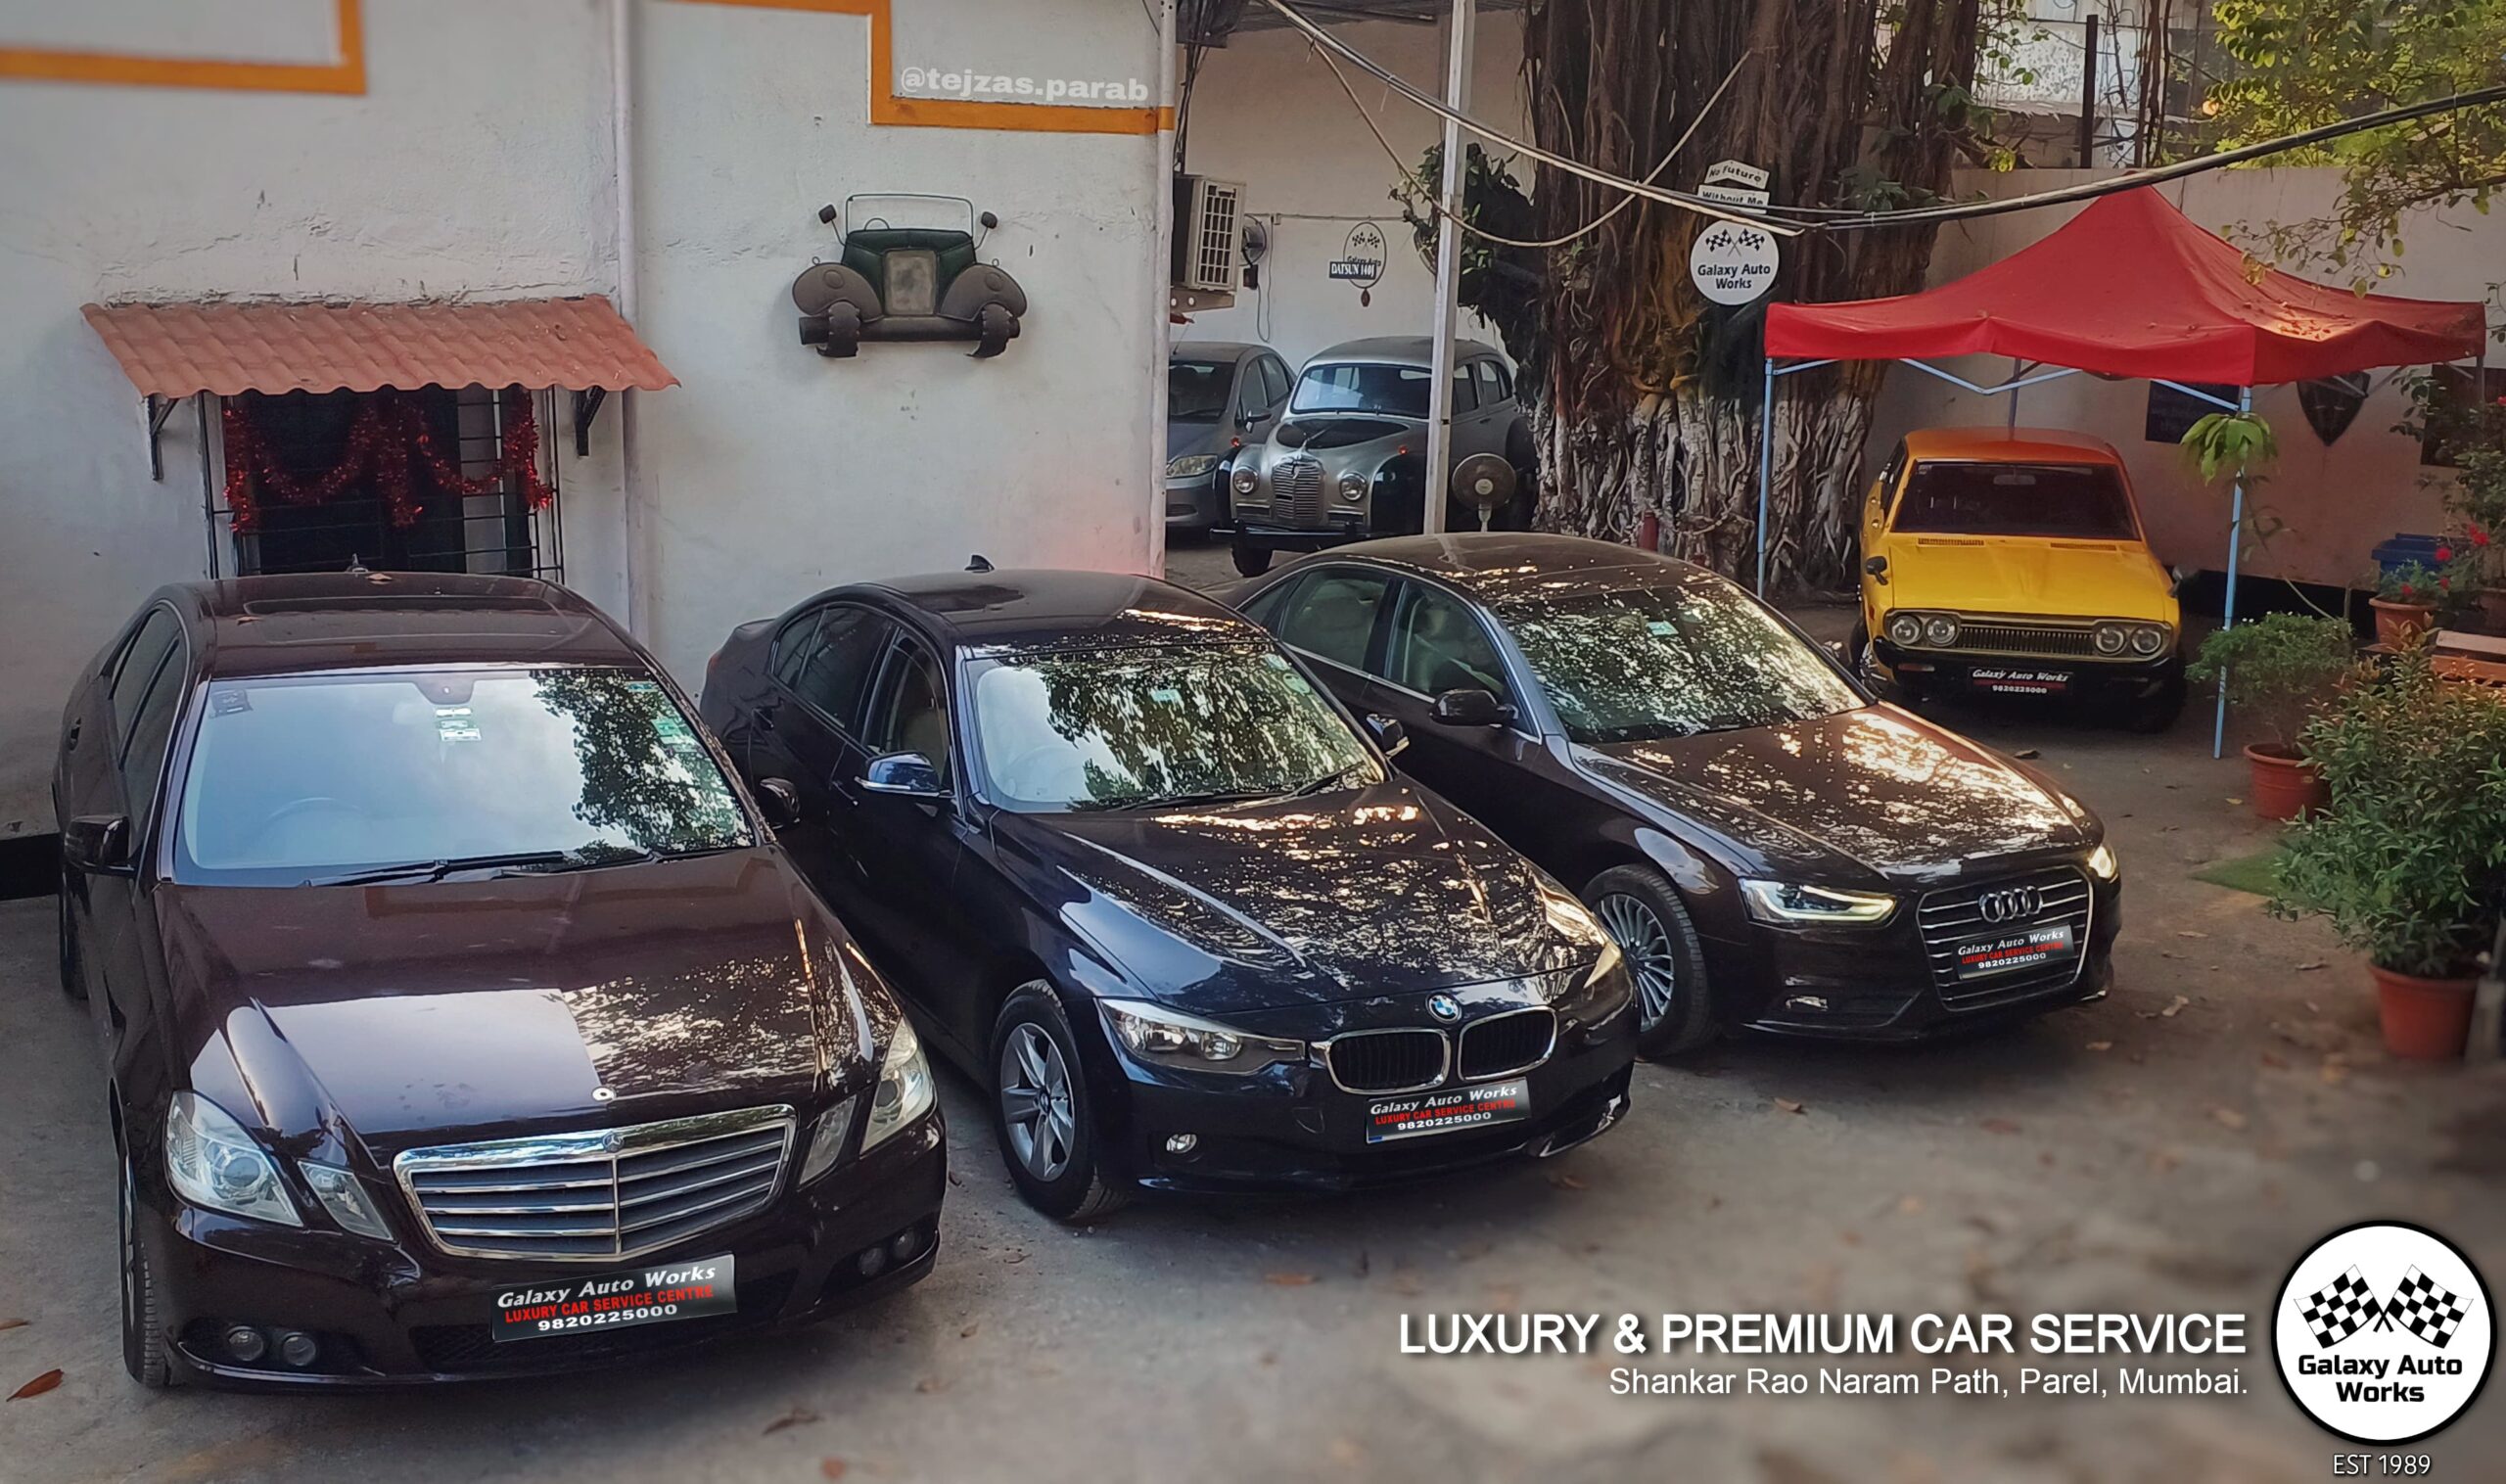 Premium Car Service in Mumbai from Galaxy Auto Works